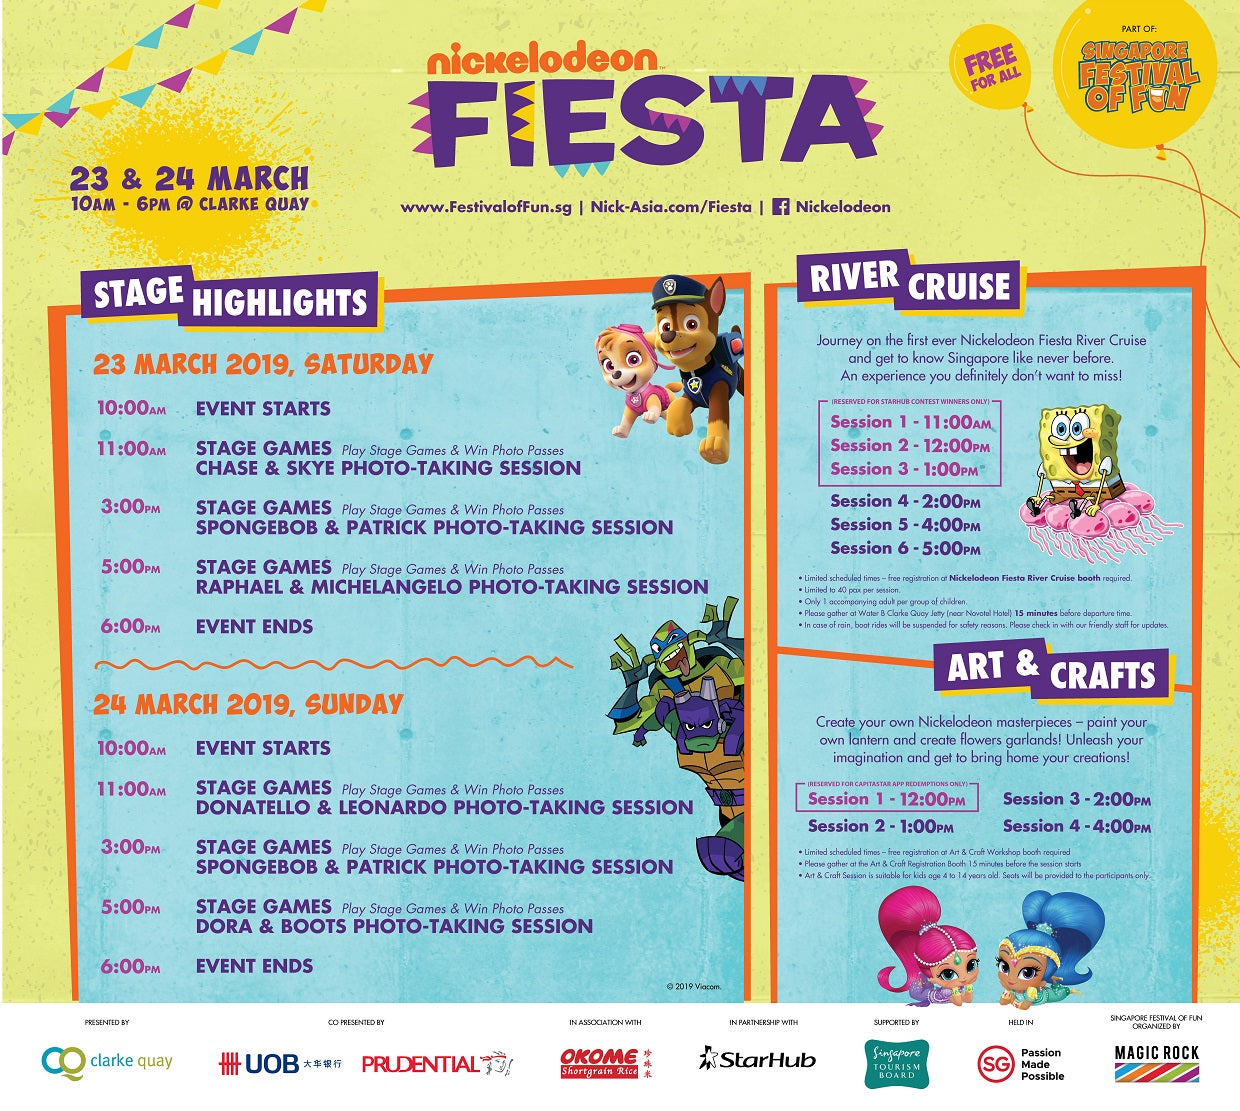 Singapore Festival of Fun - Nickelodeon Fiesta